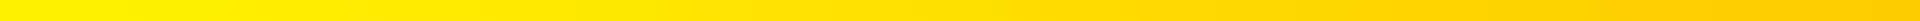 Pleca de color amarillo larga